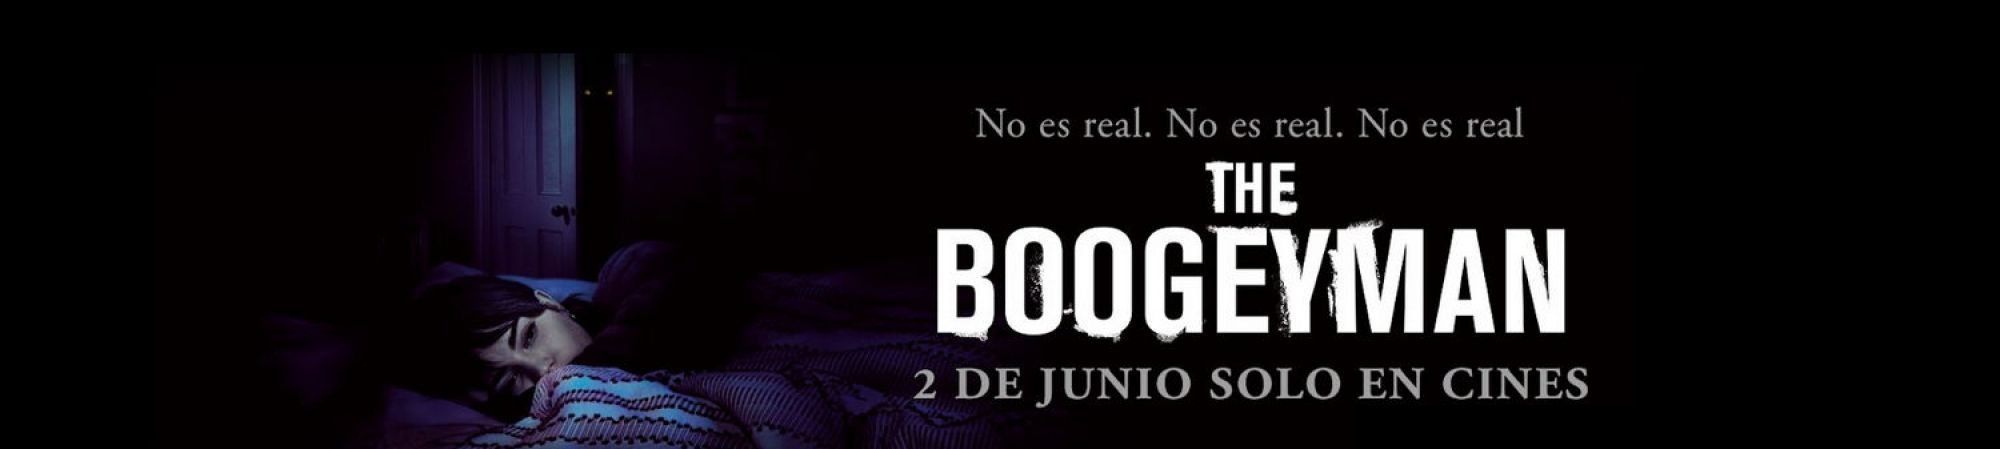 The Boogeyman (Banner Superior)